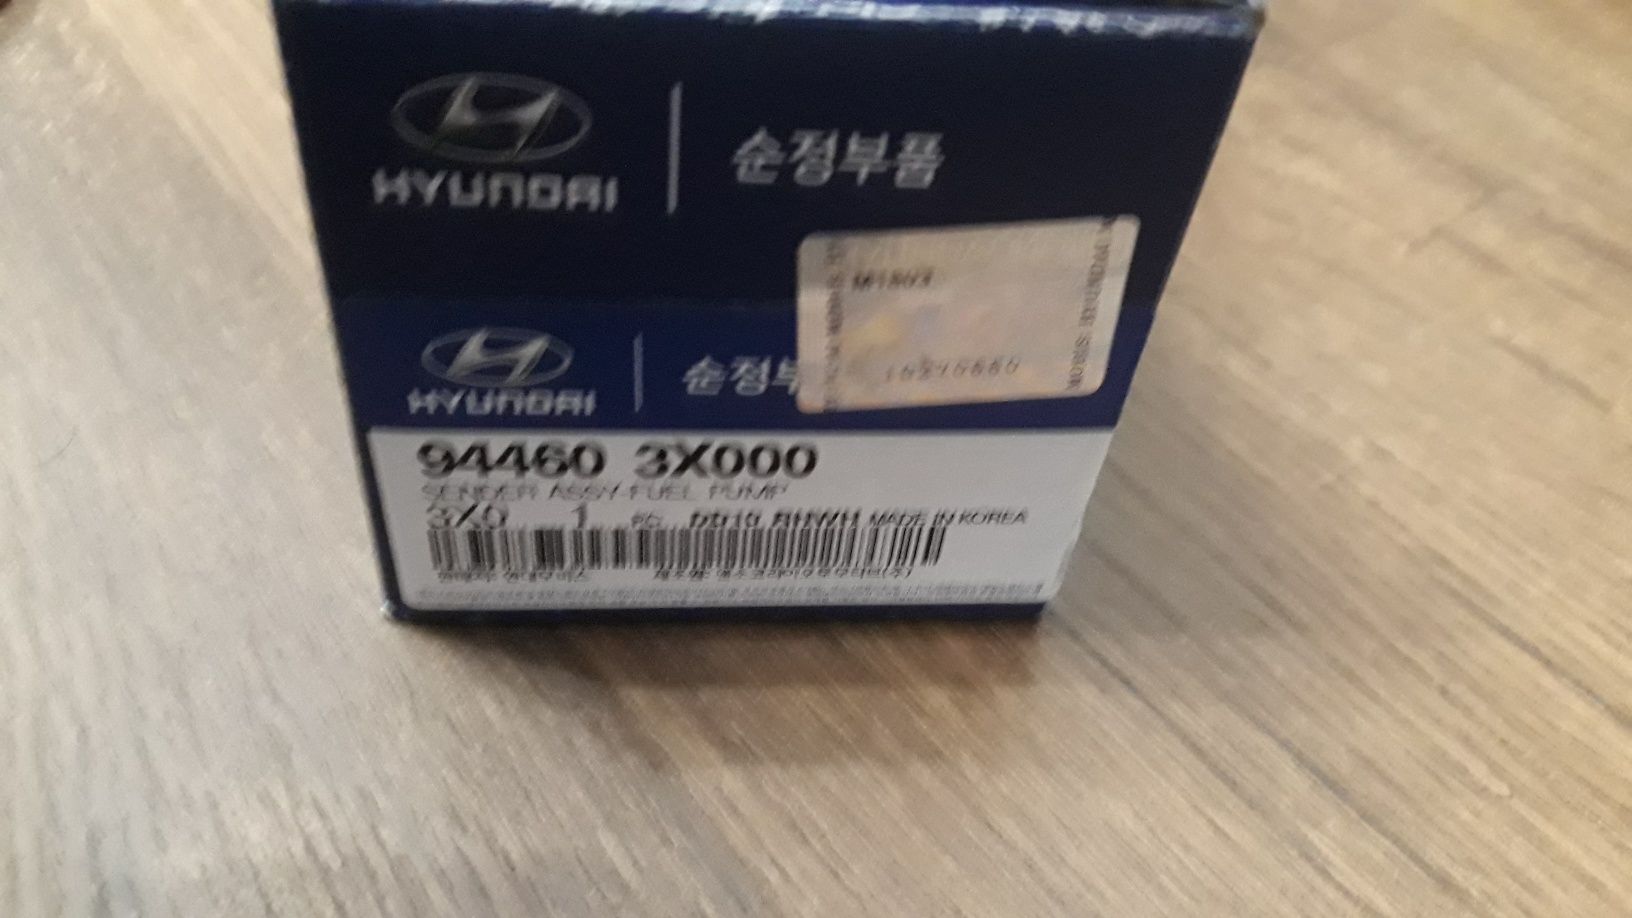 датчик уровня топлива в баке Hyundai/KIA - 94460-3X000 - ОРИГИНАЛ